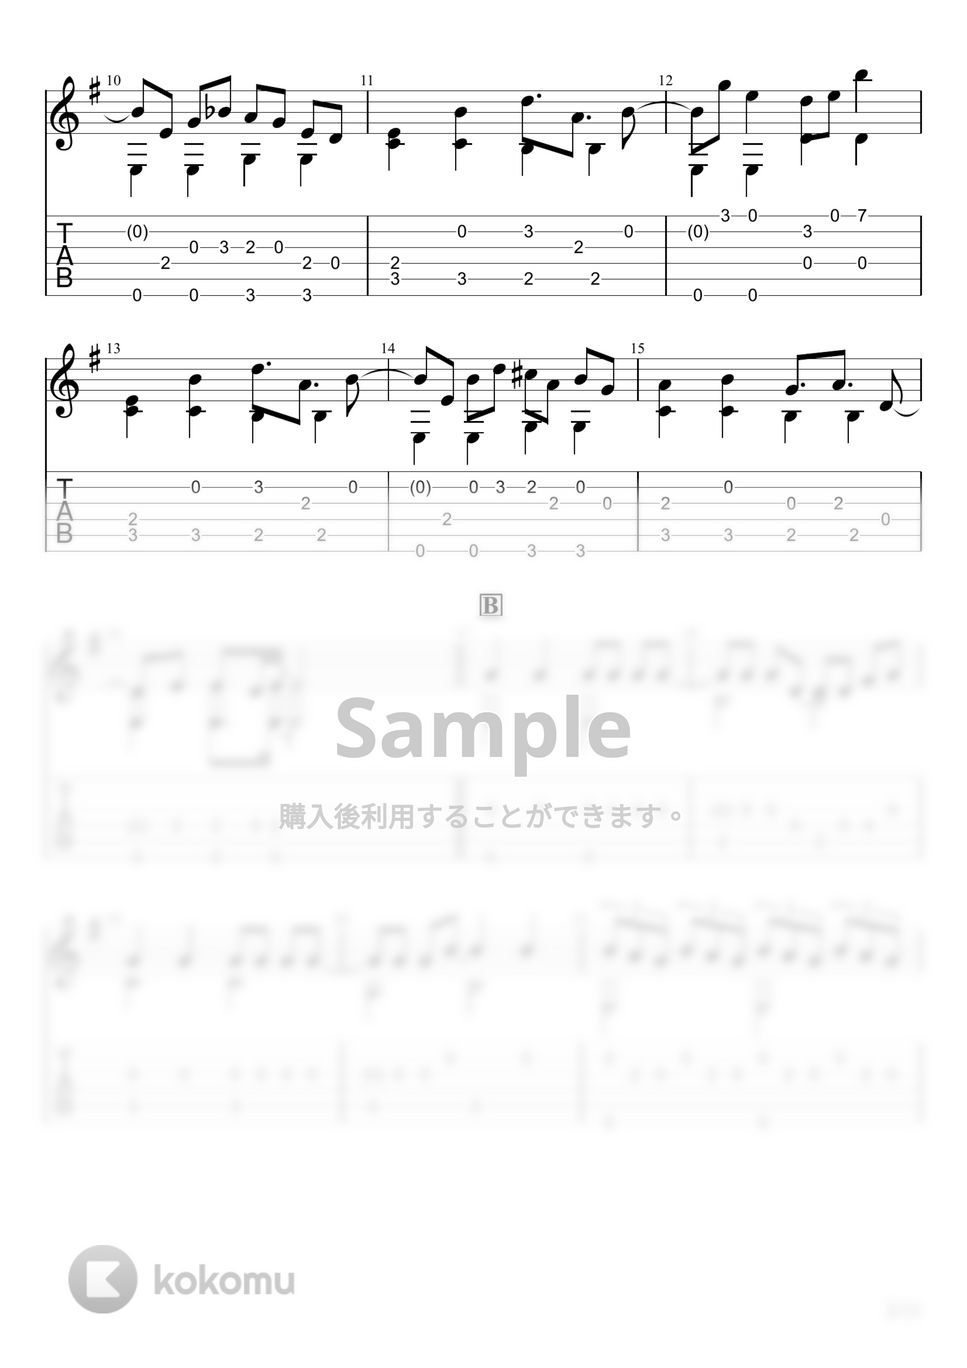 DECO*27 - 乙女解剖 (ソロギター) by u3danchou